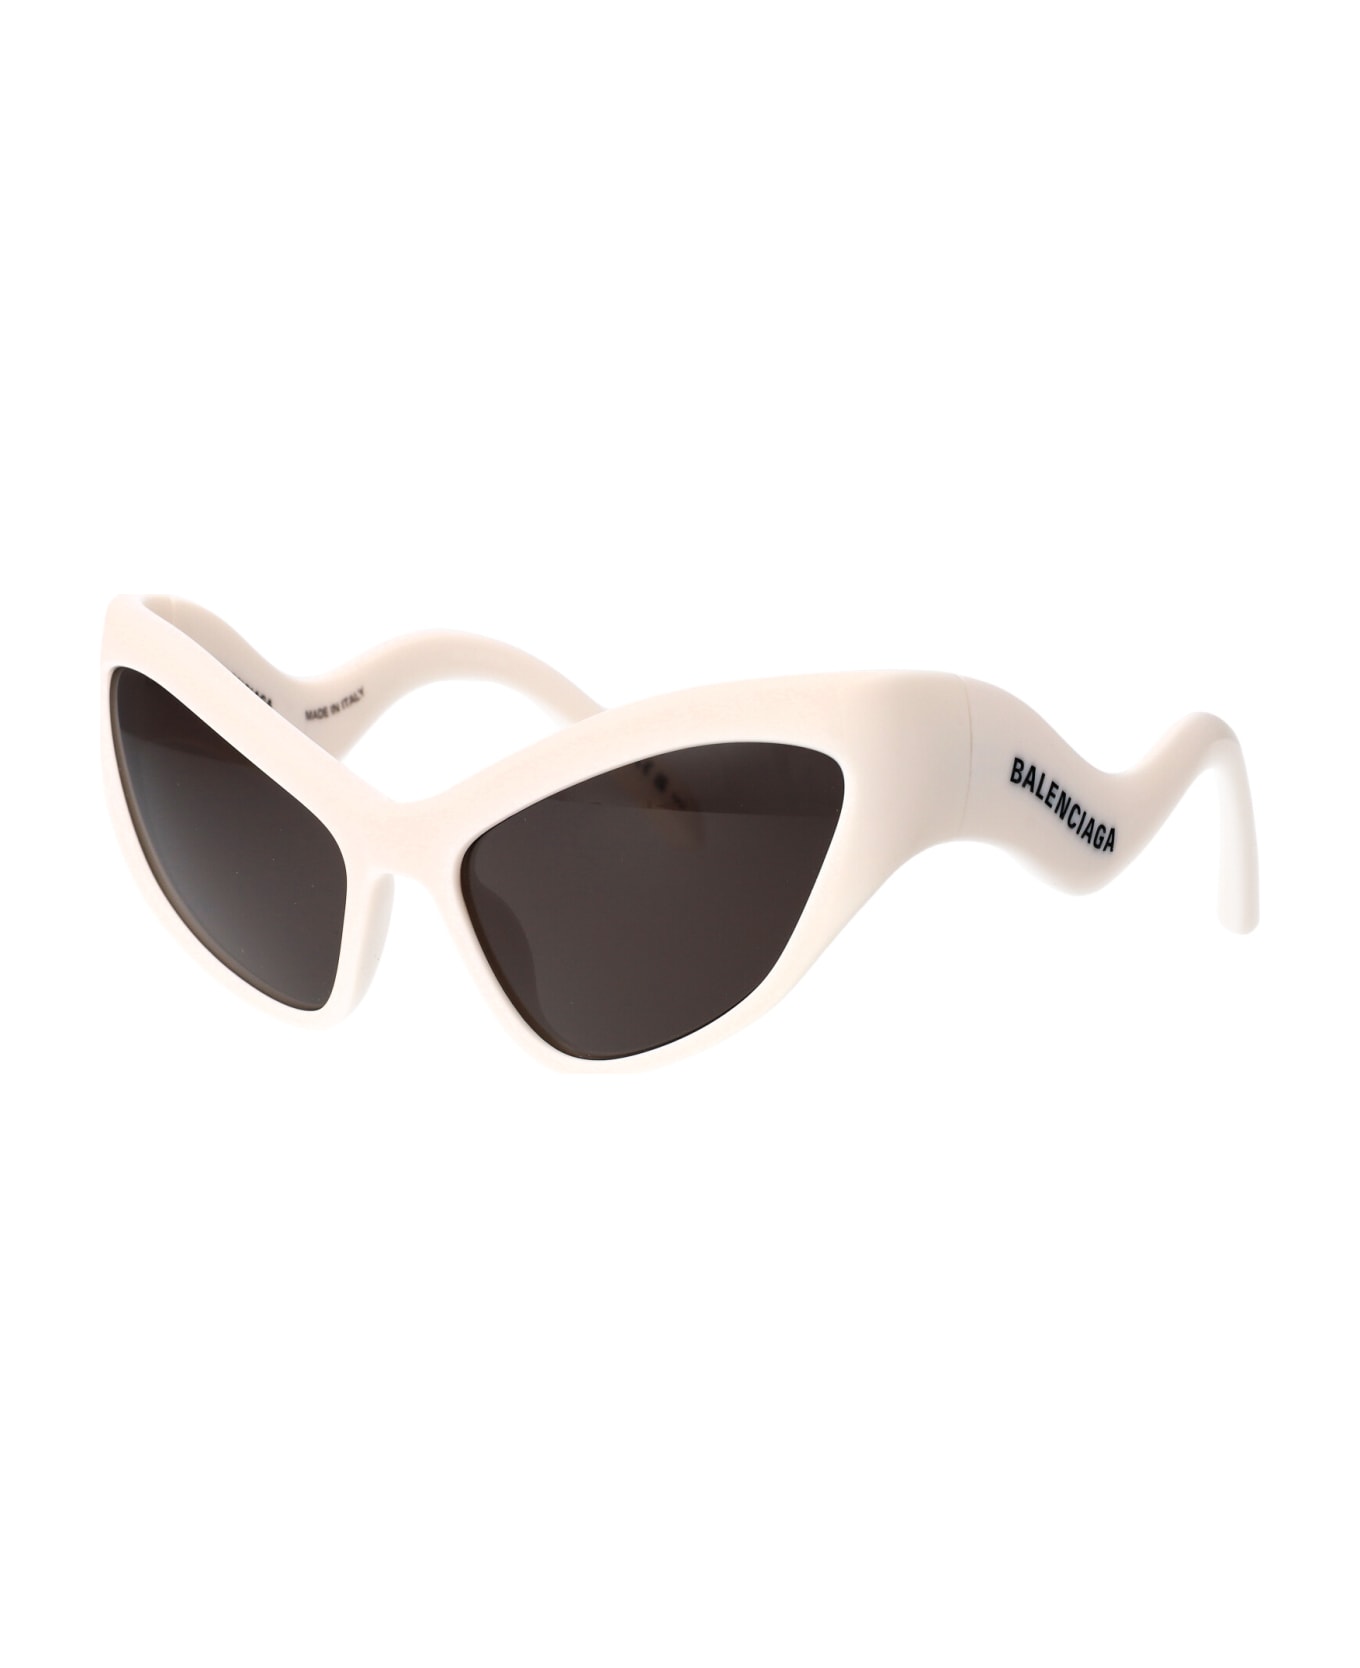 Balenciaga Eyewear Bb0319s Sunglasses - 003 IVORY IVORY GREY